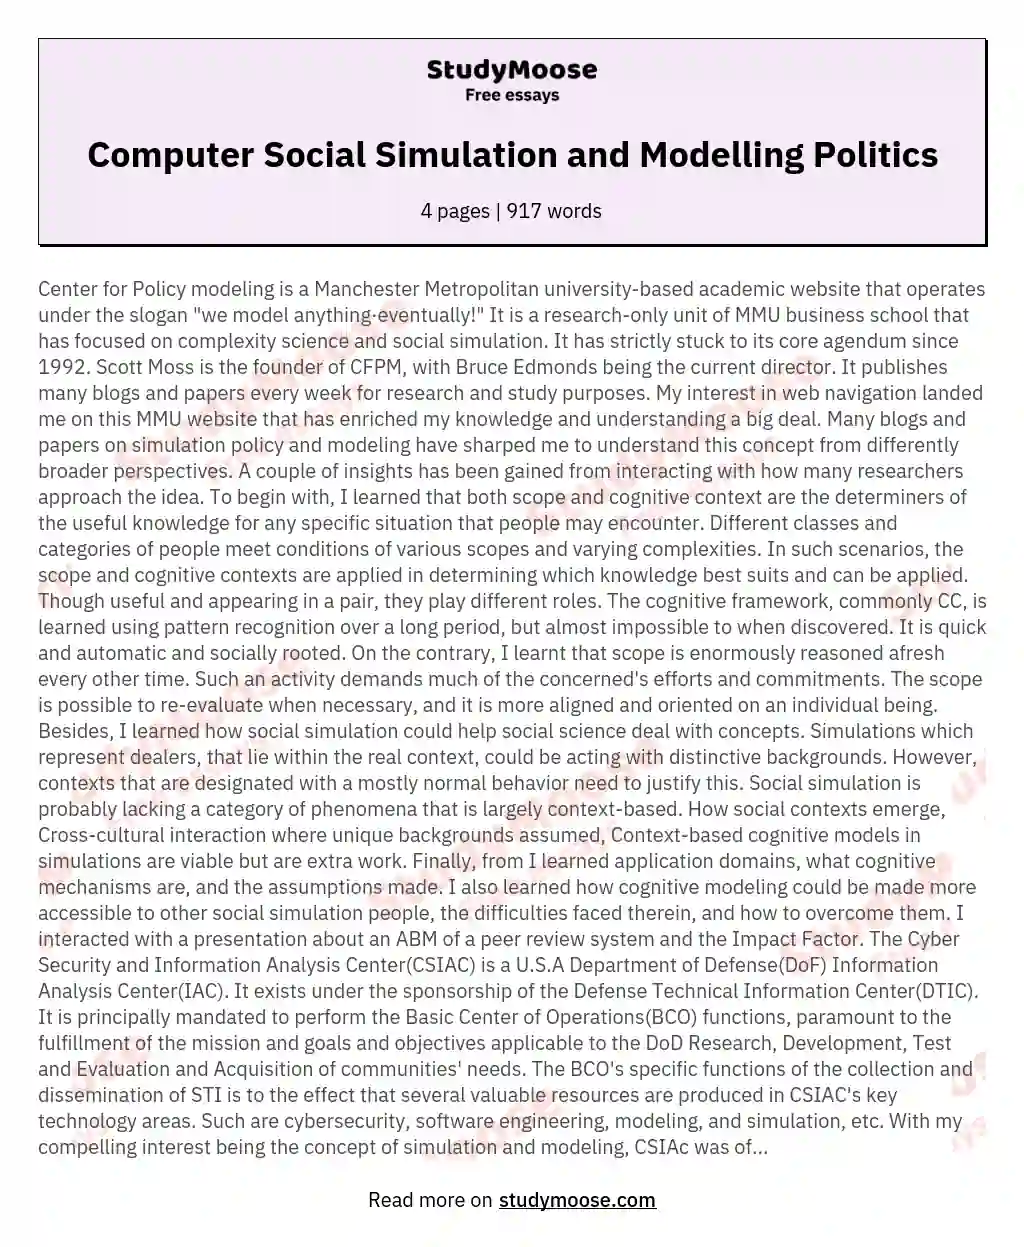 Computer Social Simulation and Modelling Politics